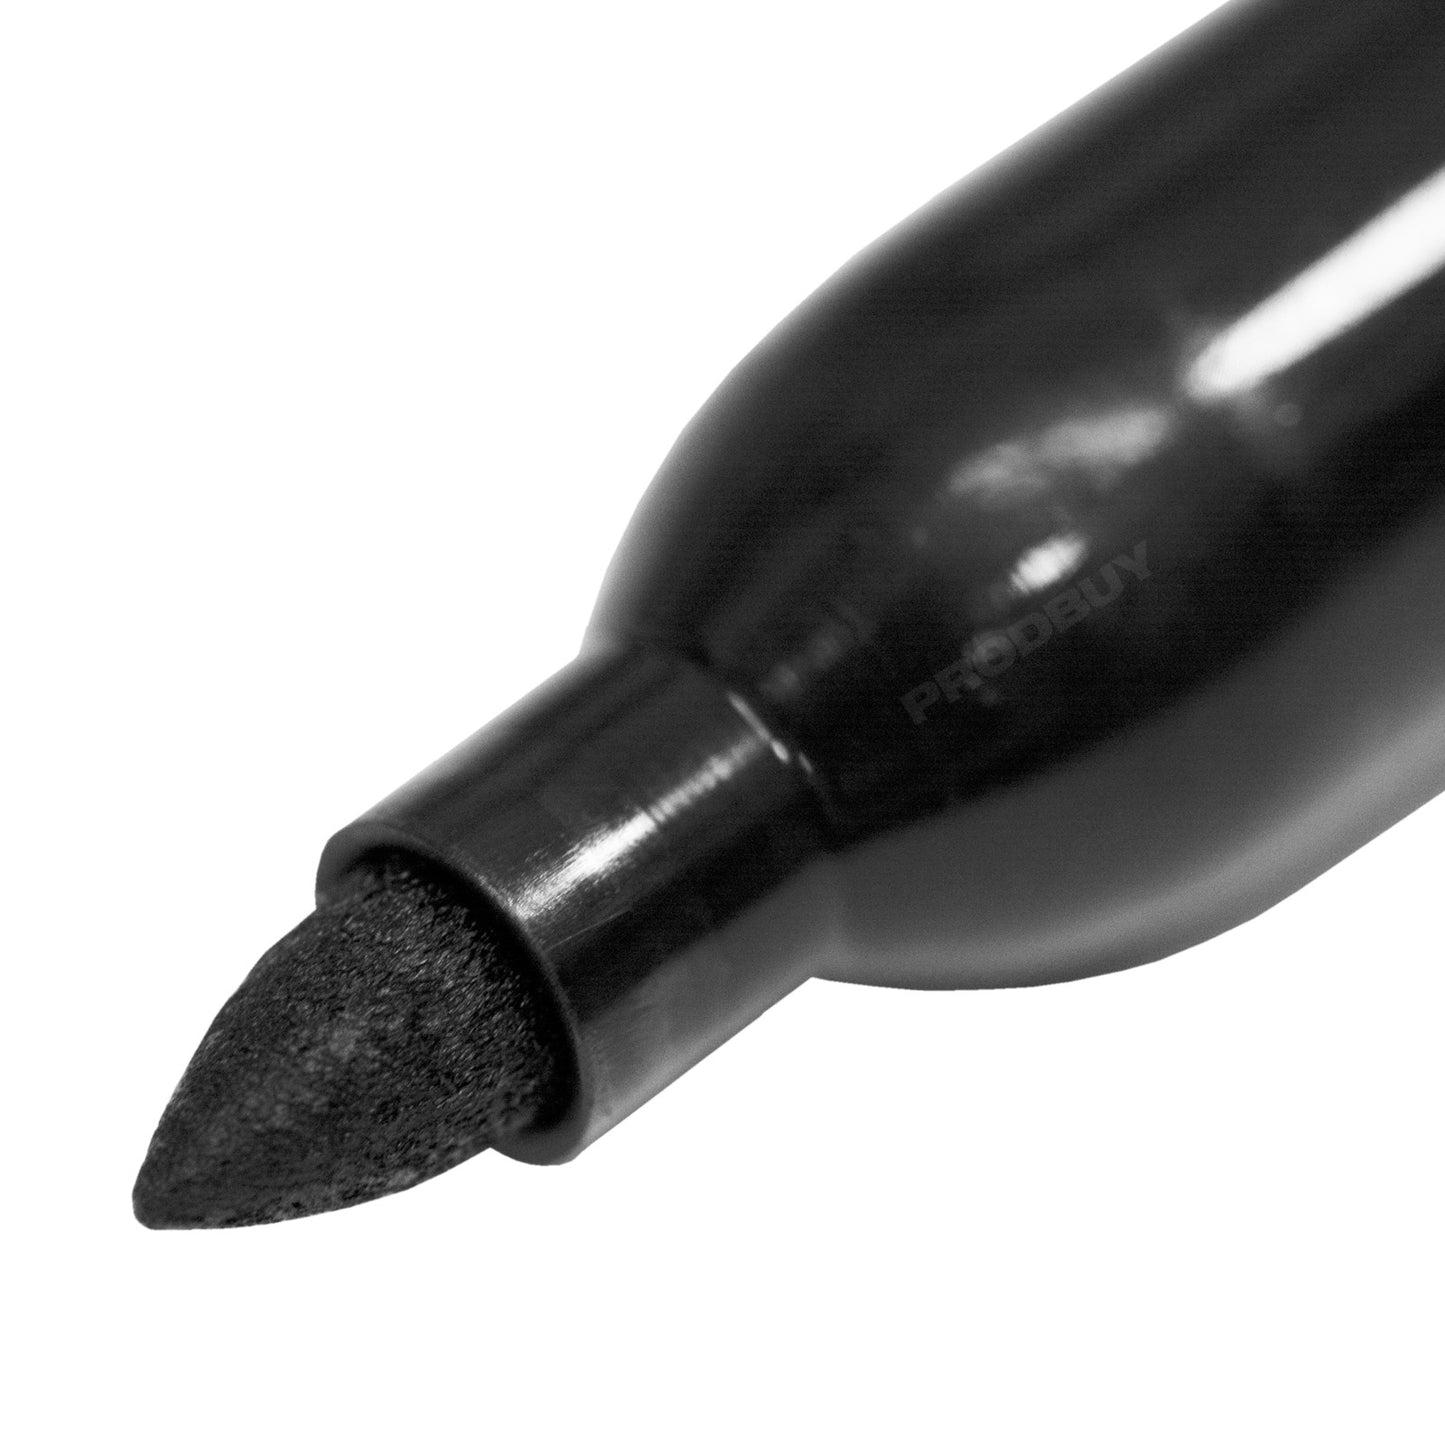 Set of 3 Sharpie Fine Permanent Marker Pens with Black Colour Ink